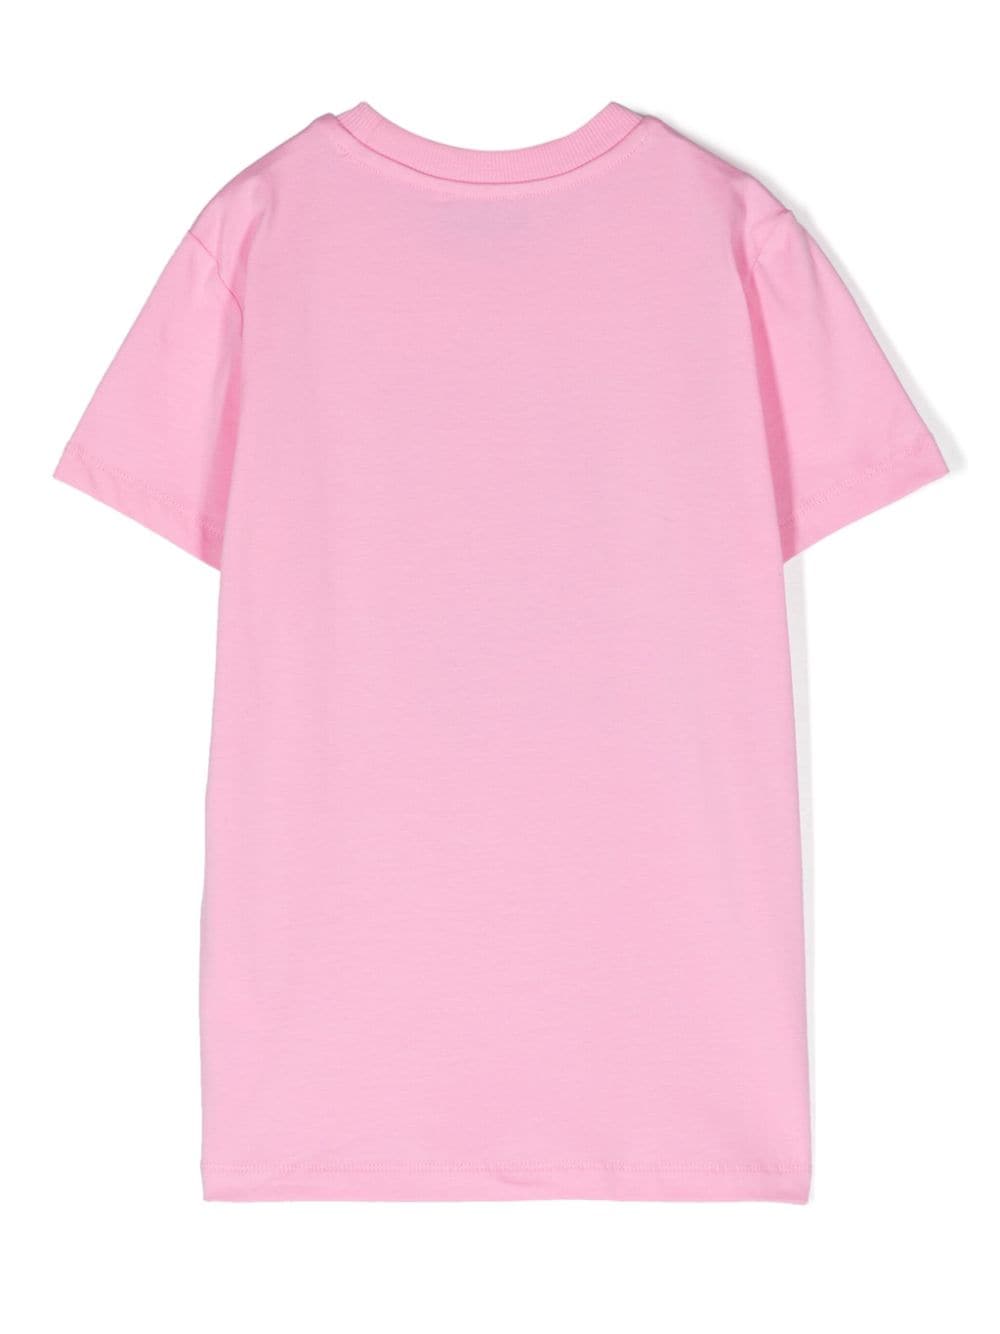 T-shirt rosa per bambina con stampa